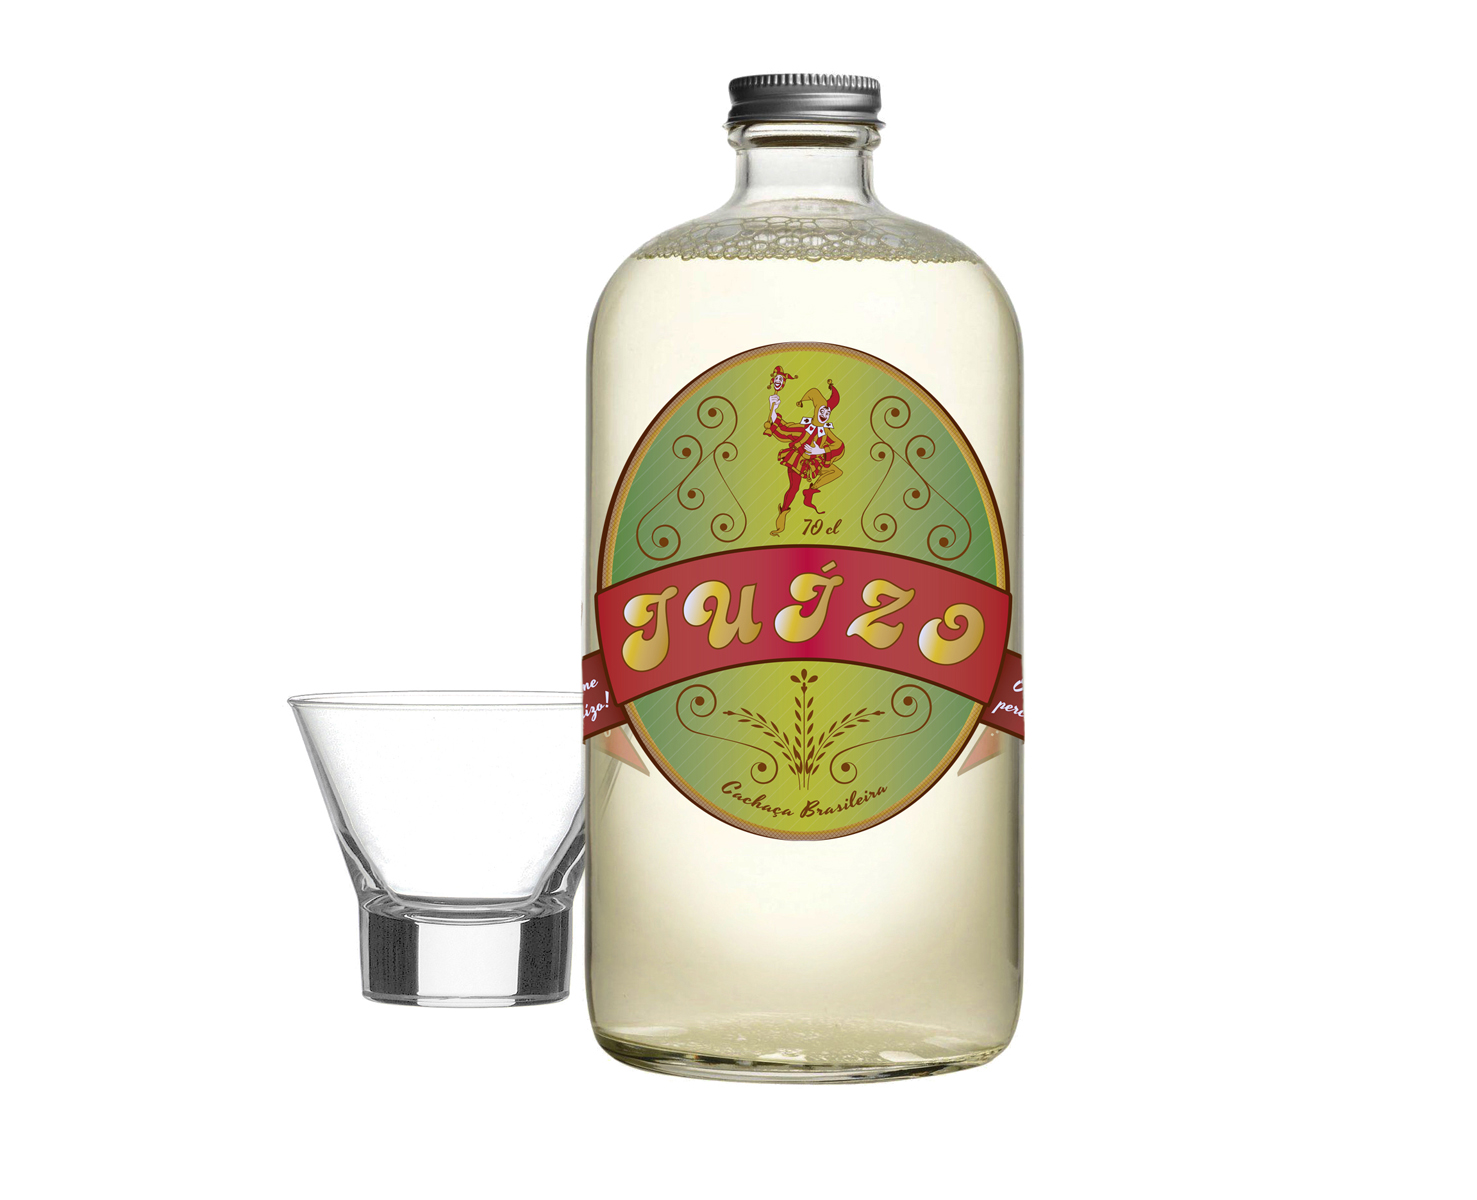 Juízo Cachaça Label on Bottle